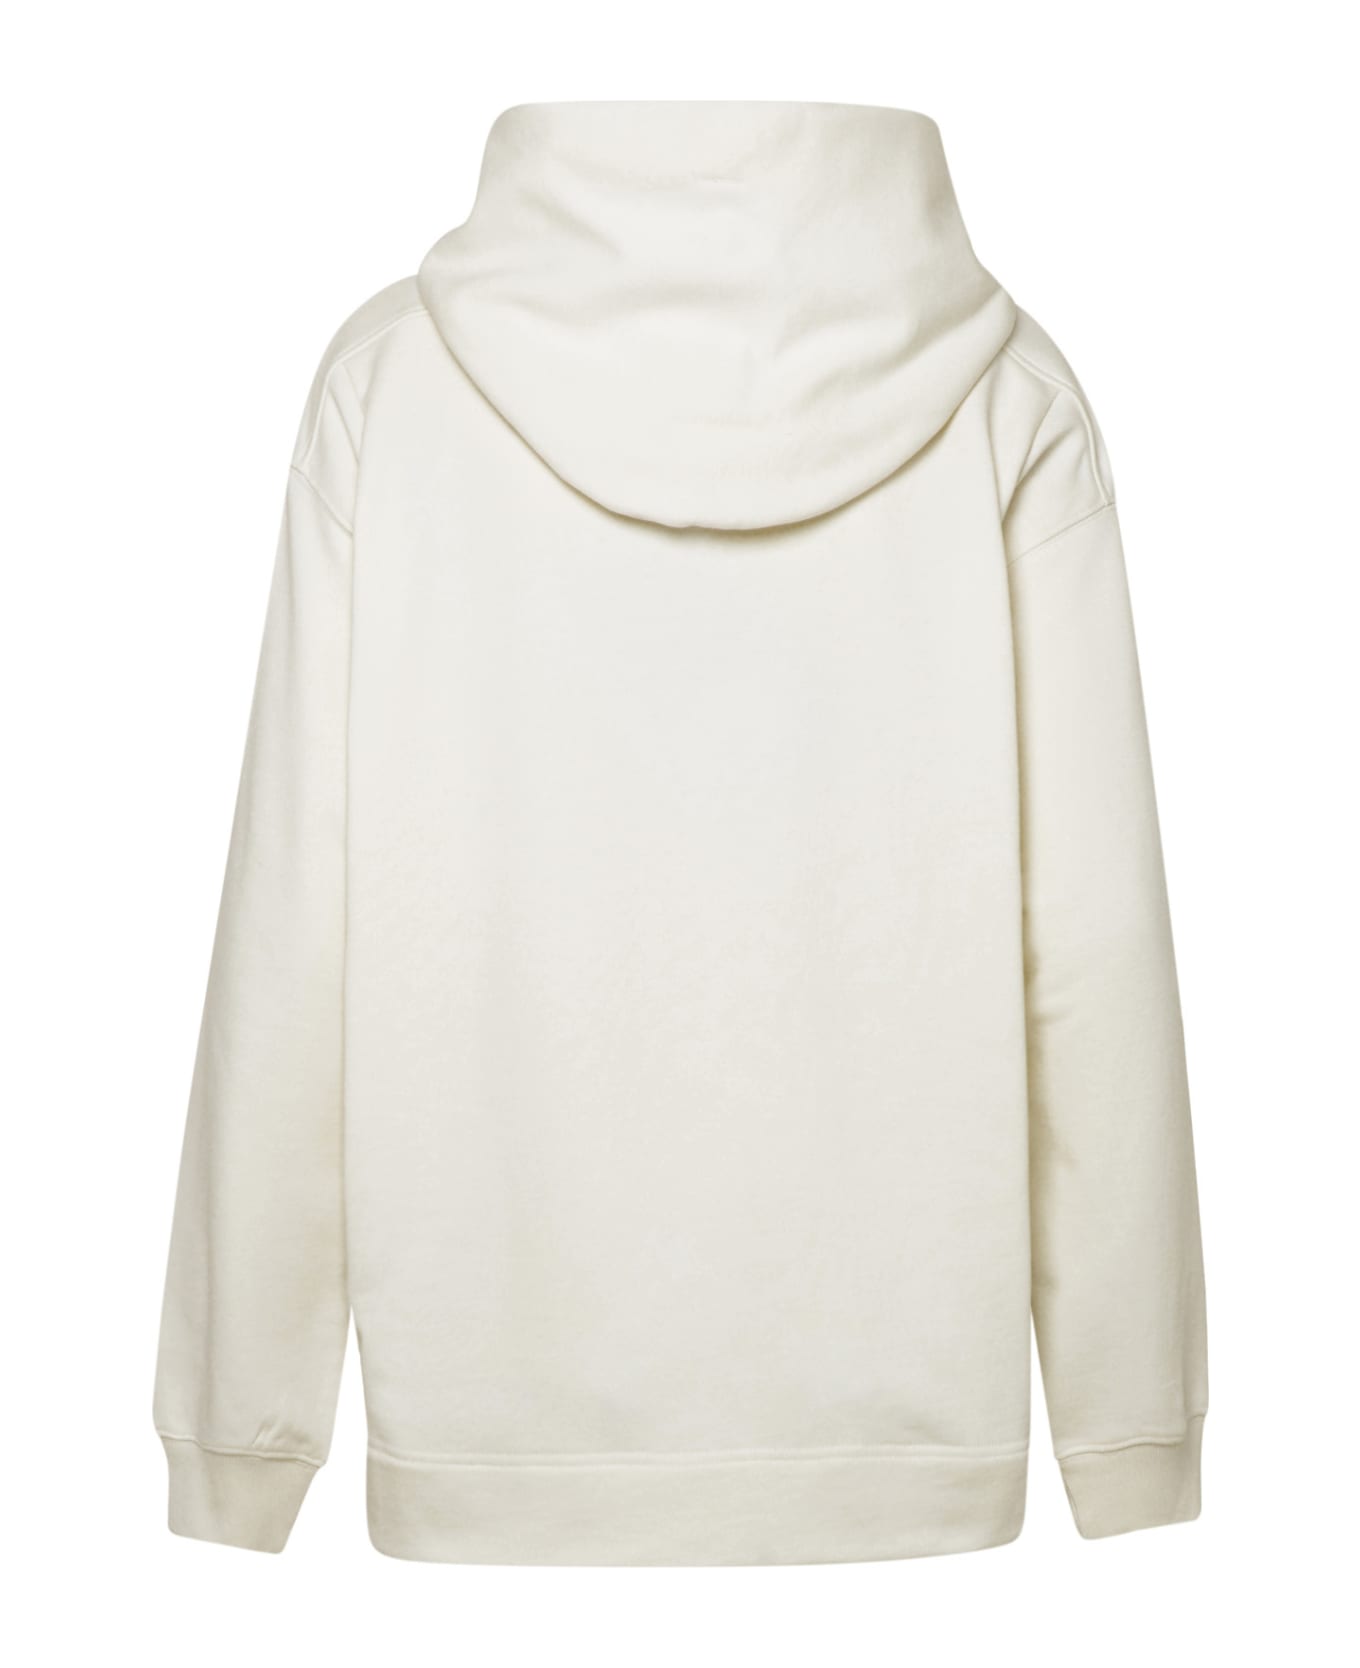 Patou Ivory Cotton Sweatshirt - White